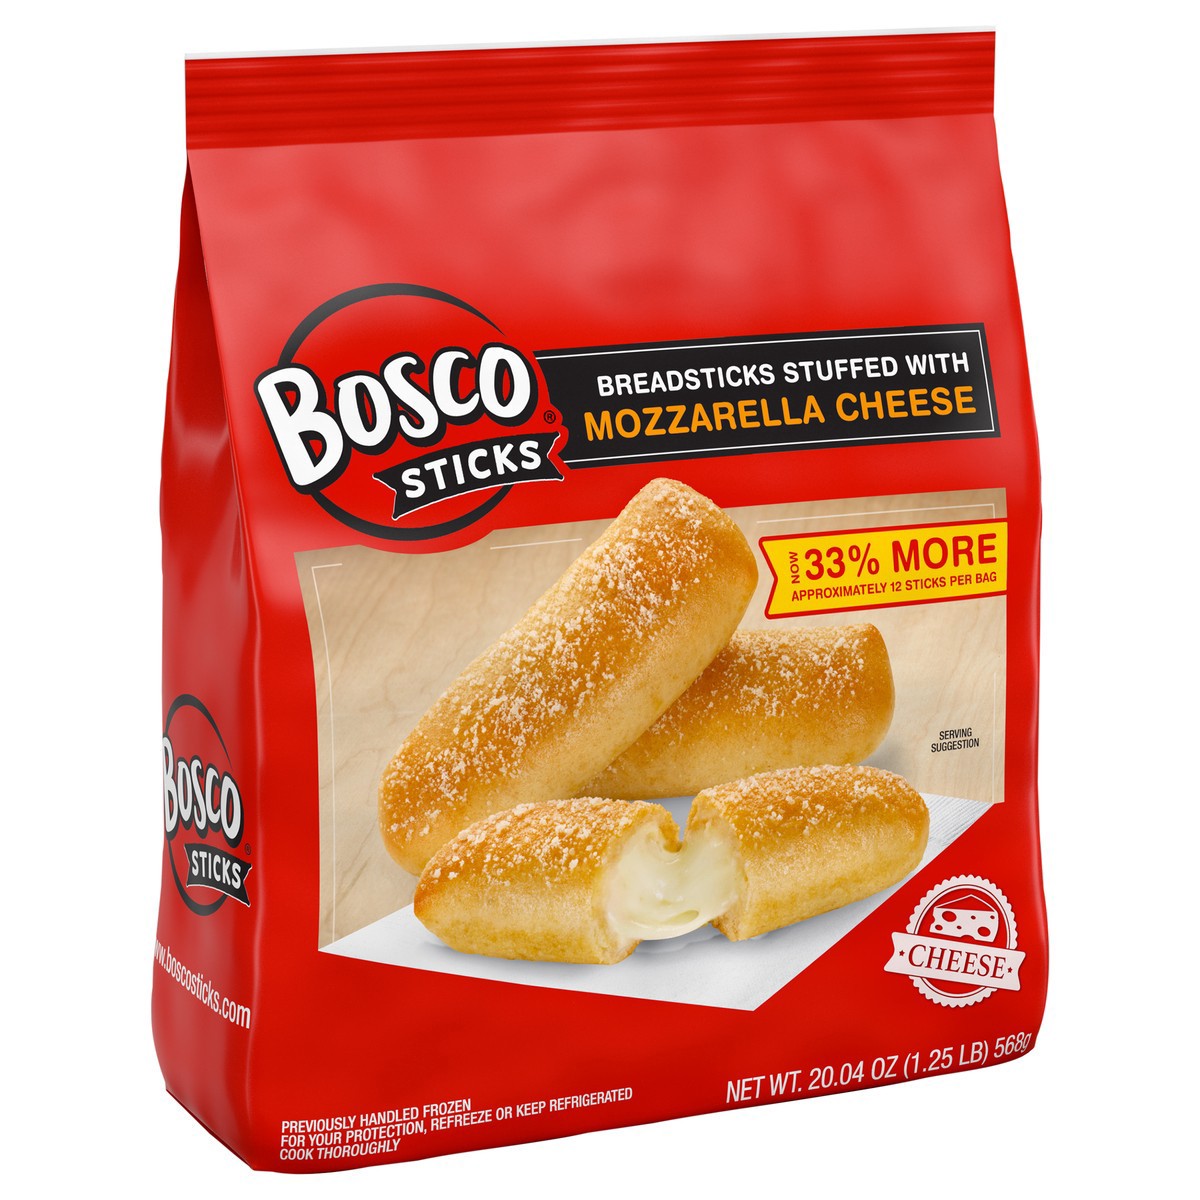 slide 5 of 5, BOSCOS PIZZA Bosco Mozzarella Cheese Stuffed Breadsticks, 20.04 oz (Frozen), 568.12 g